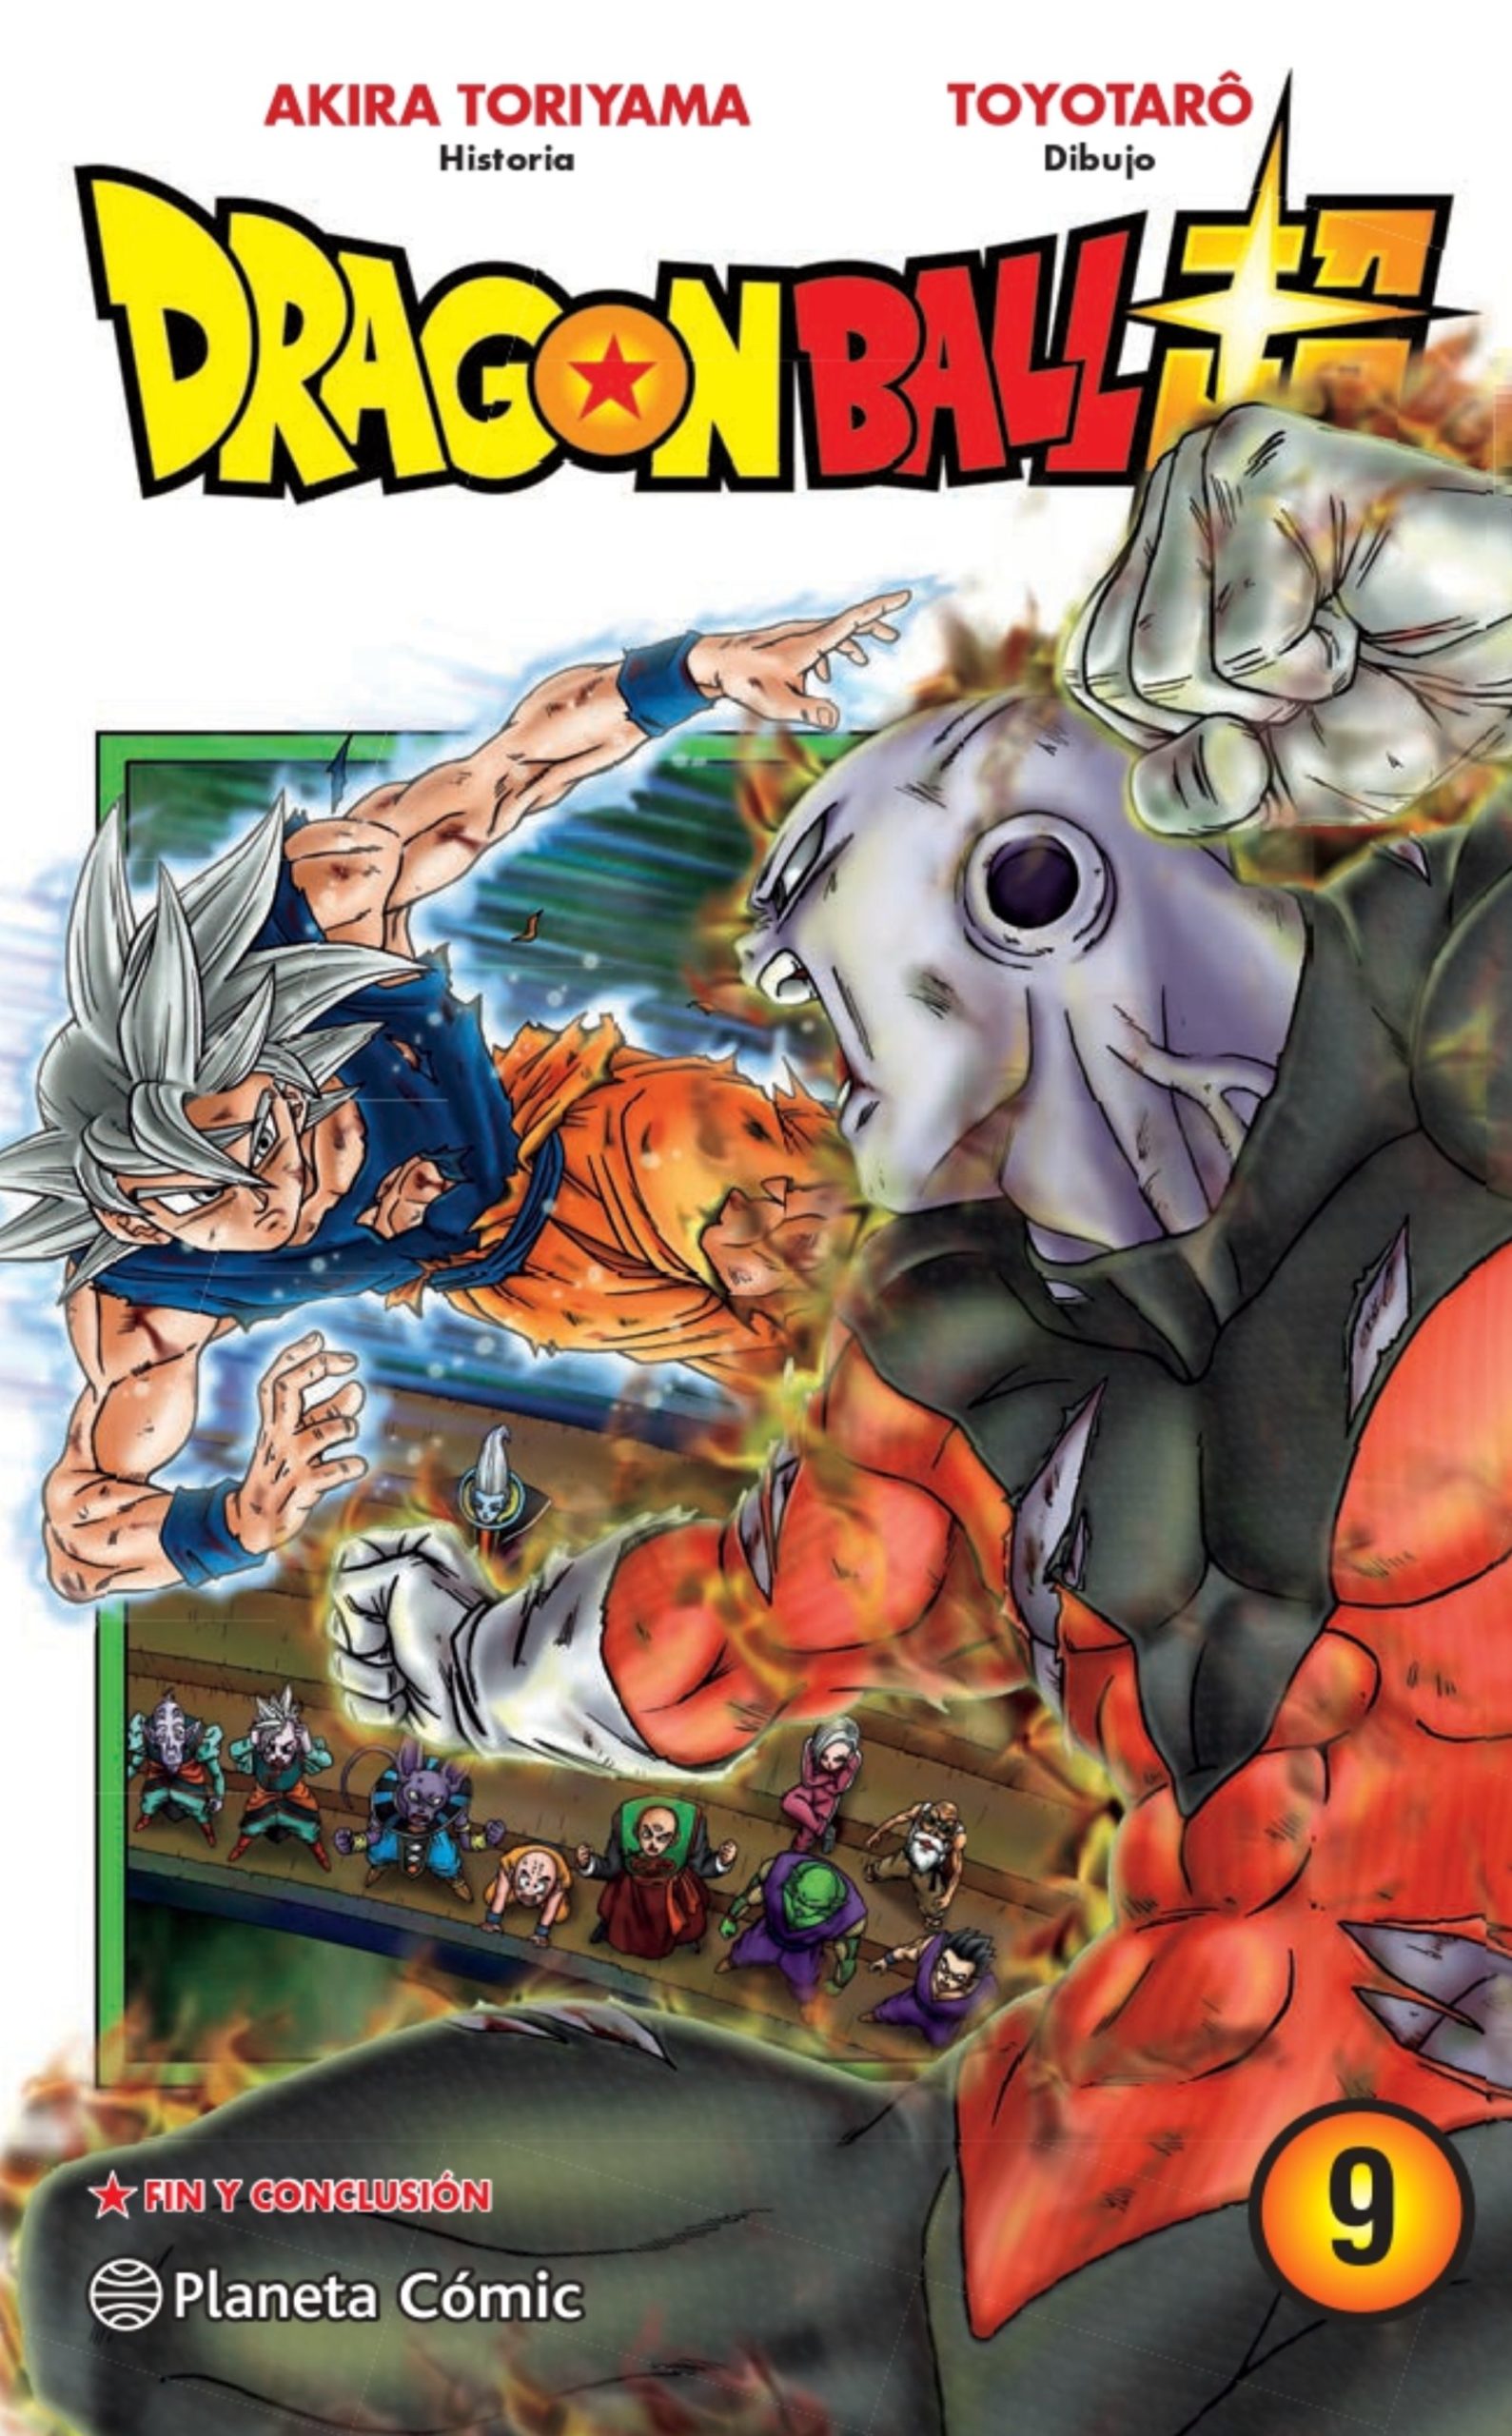 Reseña: Dragon Ball Super nº 09 (Toriyama y Toyotaro) | Reserva de Maná